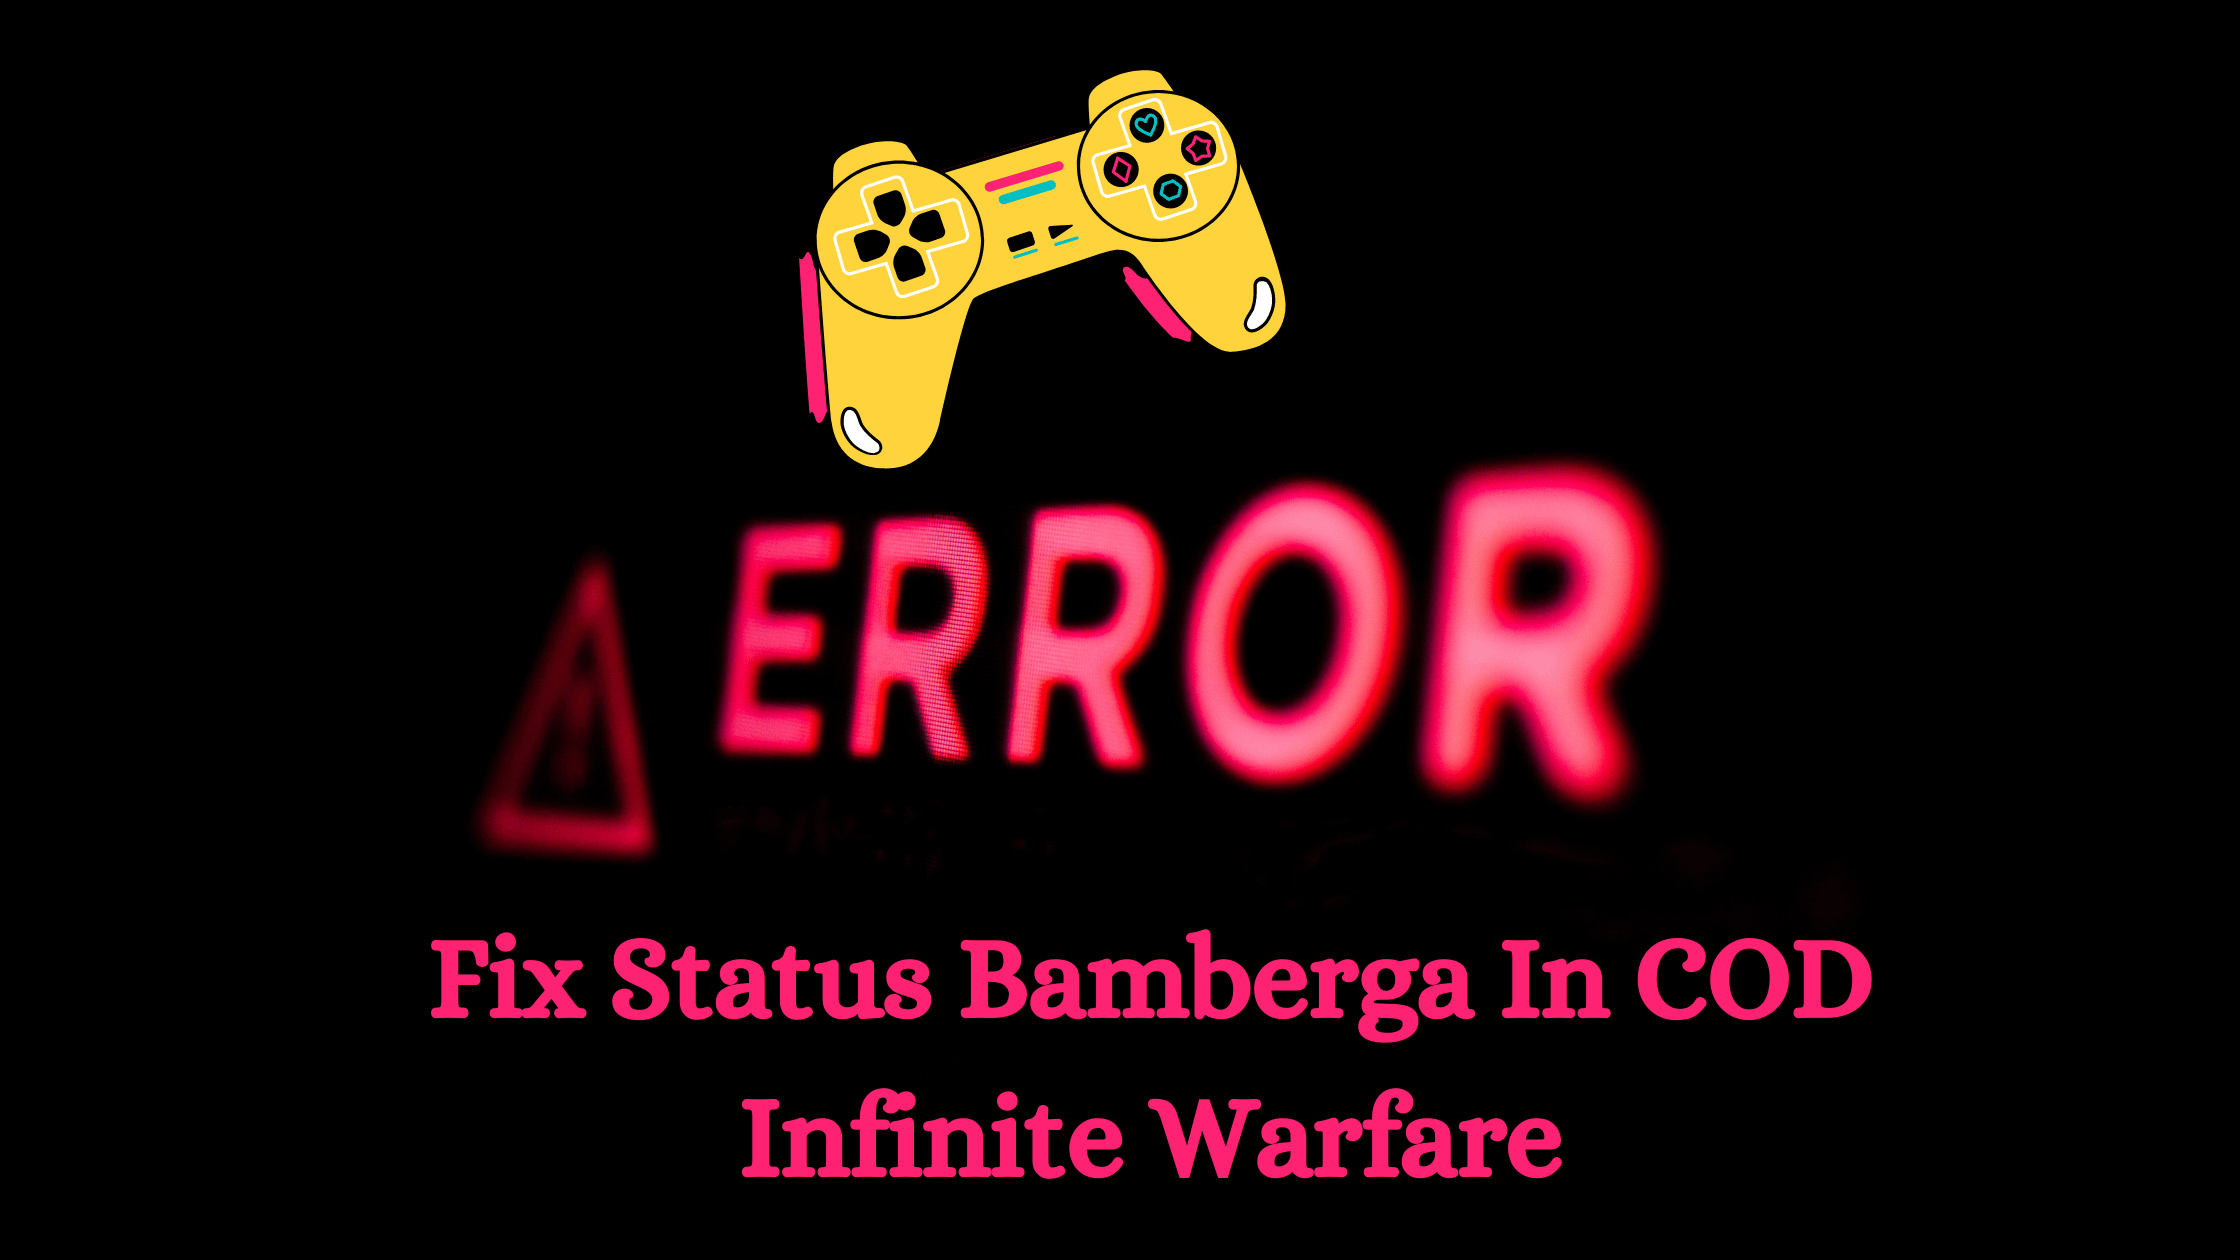 bamberga infinite warfare fix